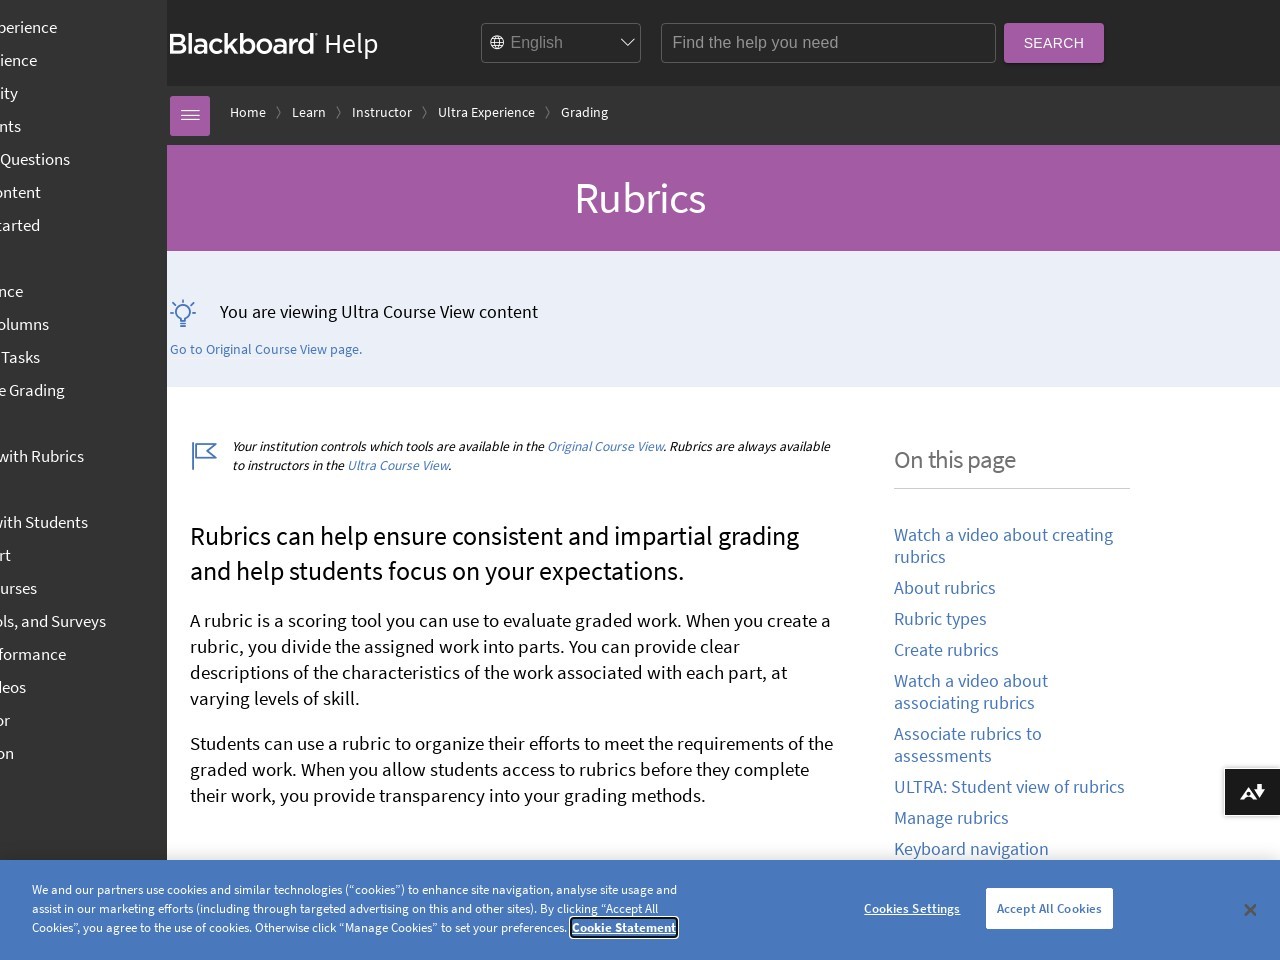 Rubrics | Blackboard Help